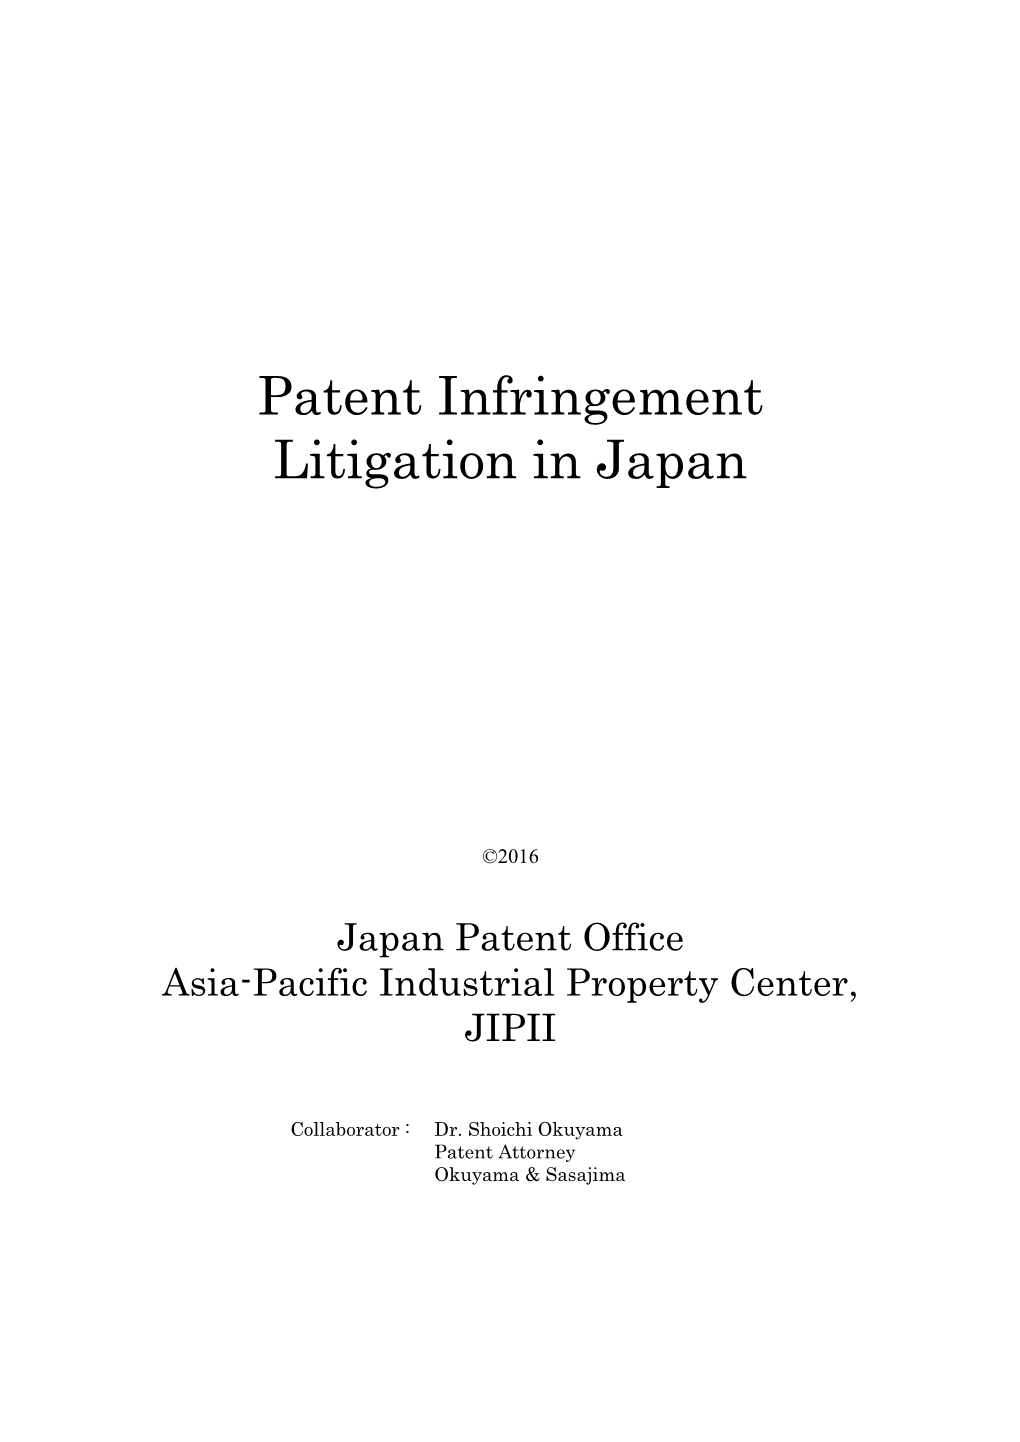 Patent Infringement Litigation in Japan